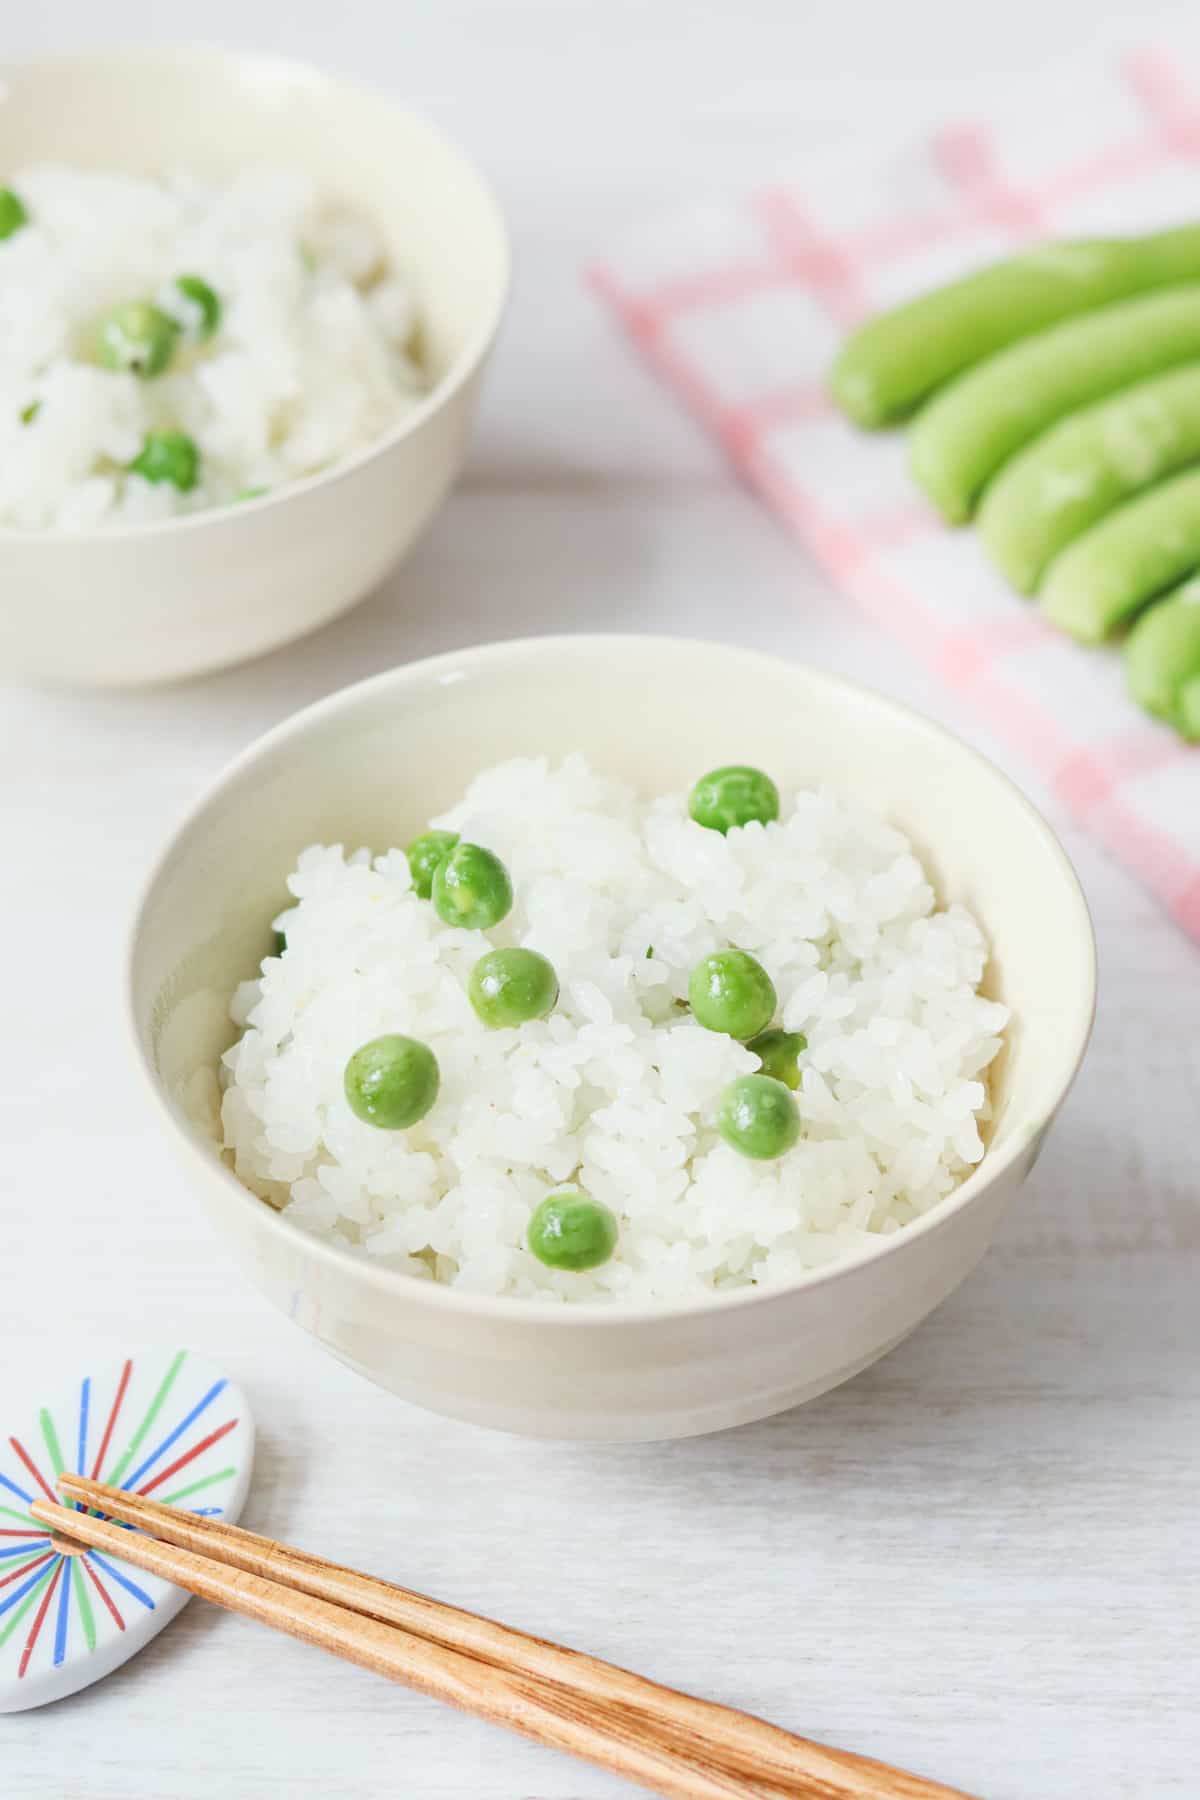 Mame Gohan (Japanese-style green pea rice)